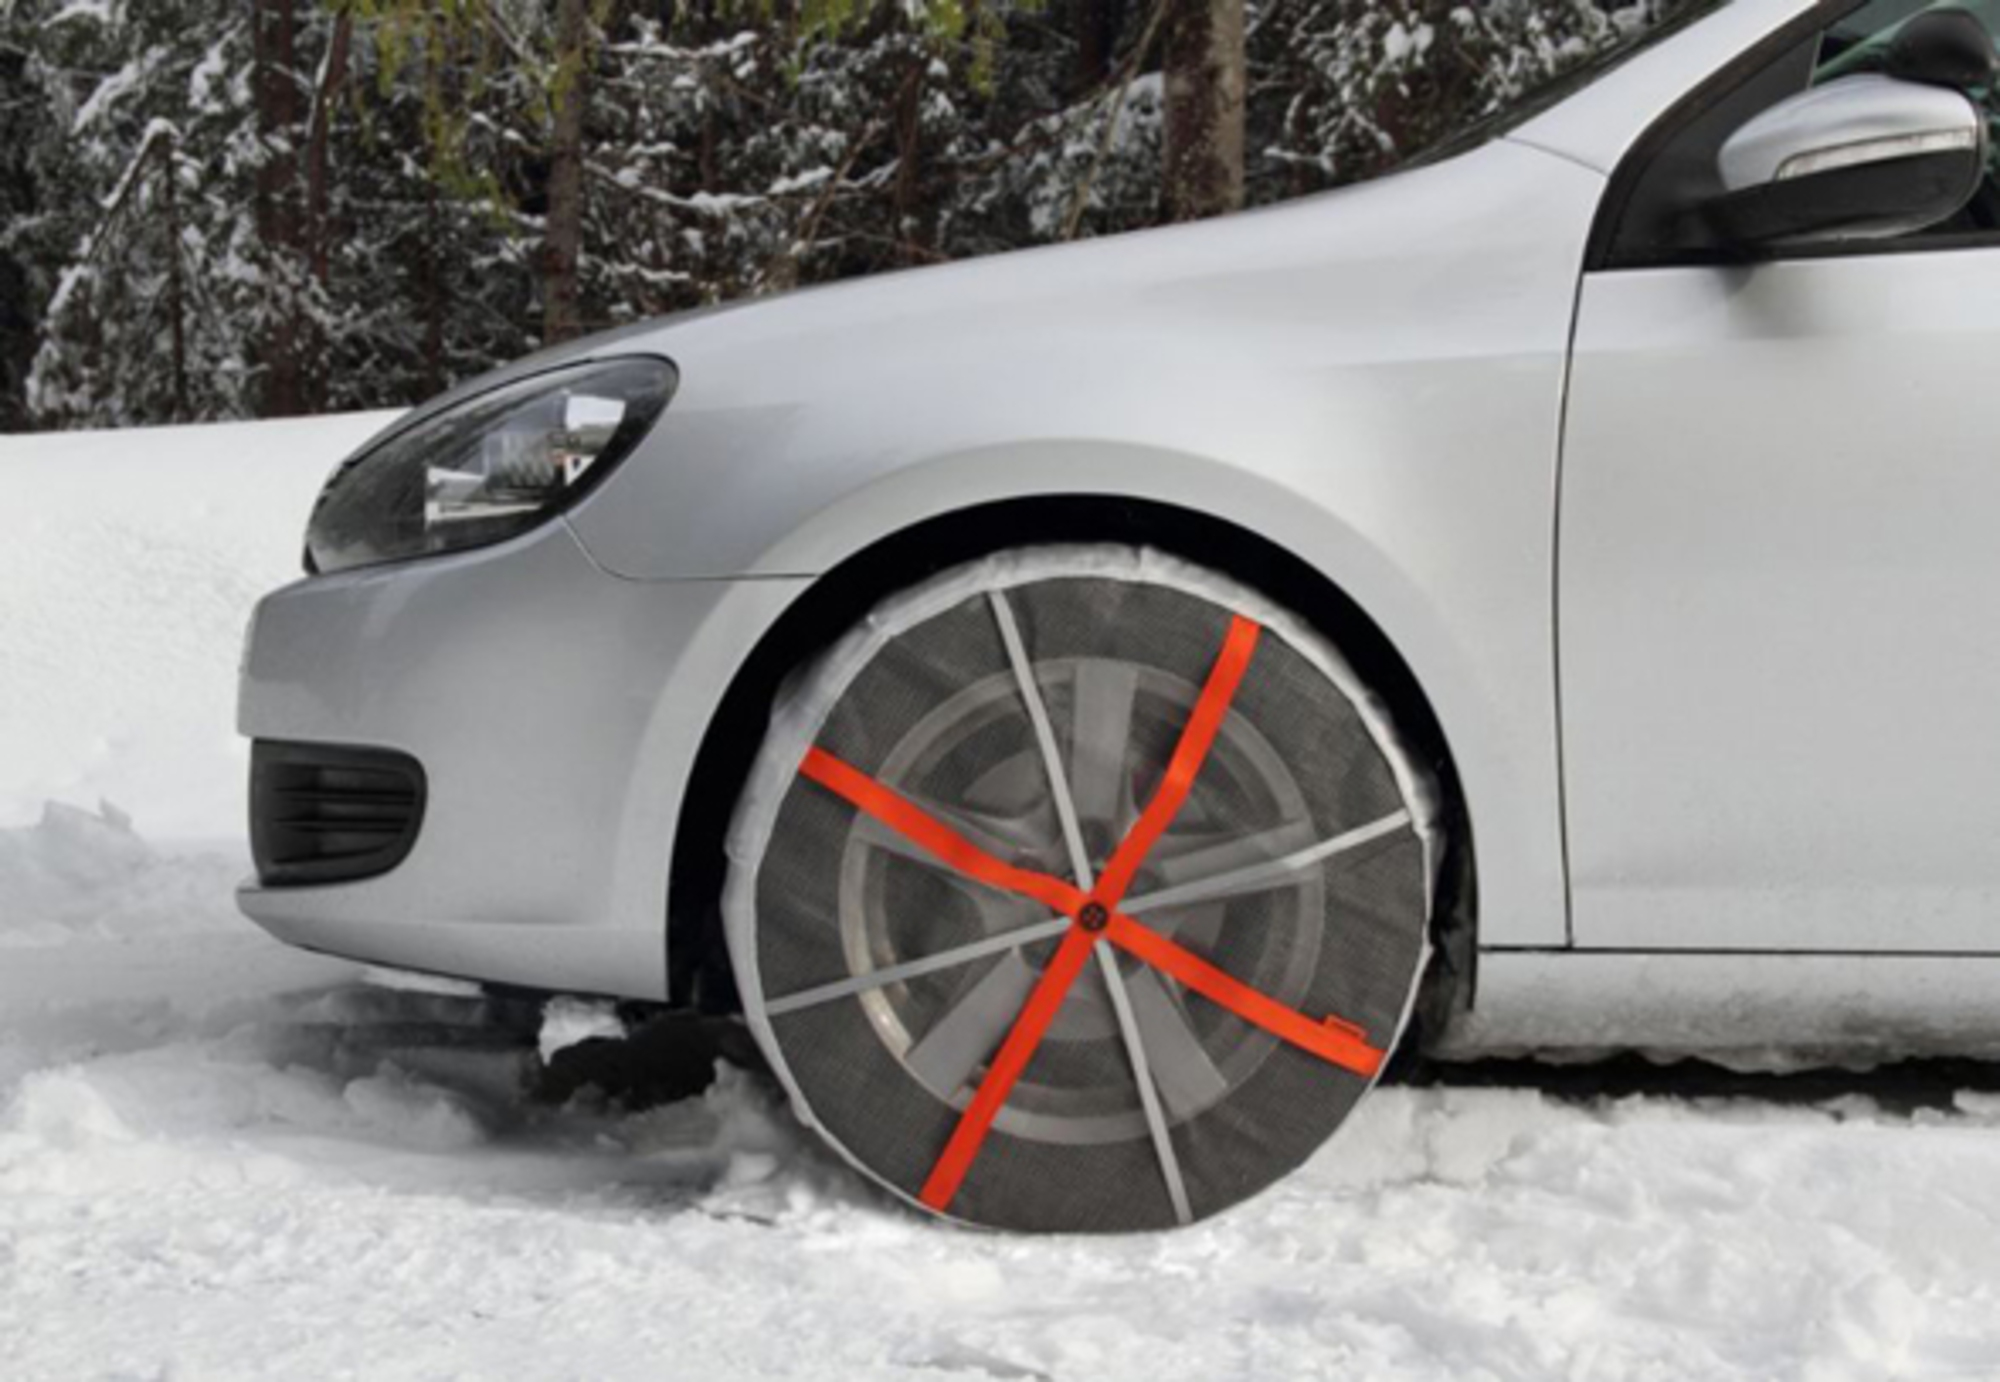 Chaussettes-neige AutoSock HP697 13/22 - Equipement garage Auto - Machine  à pneu - Démonte pneu 